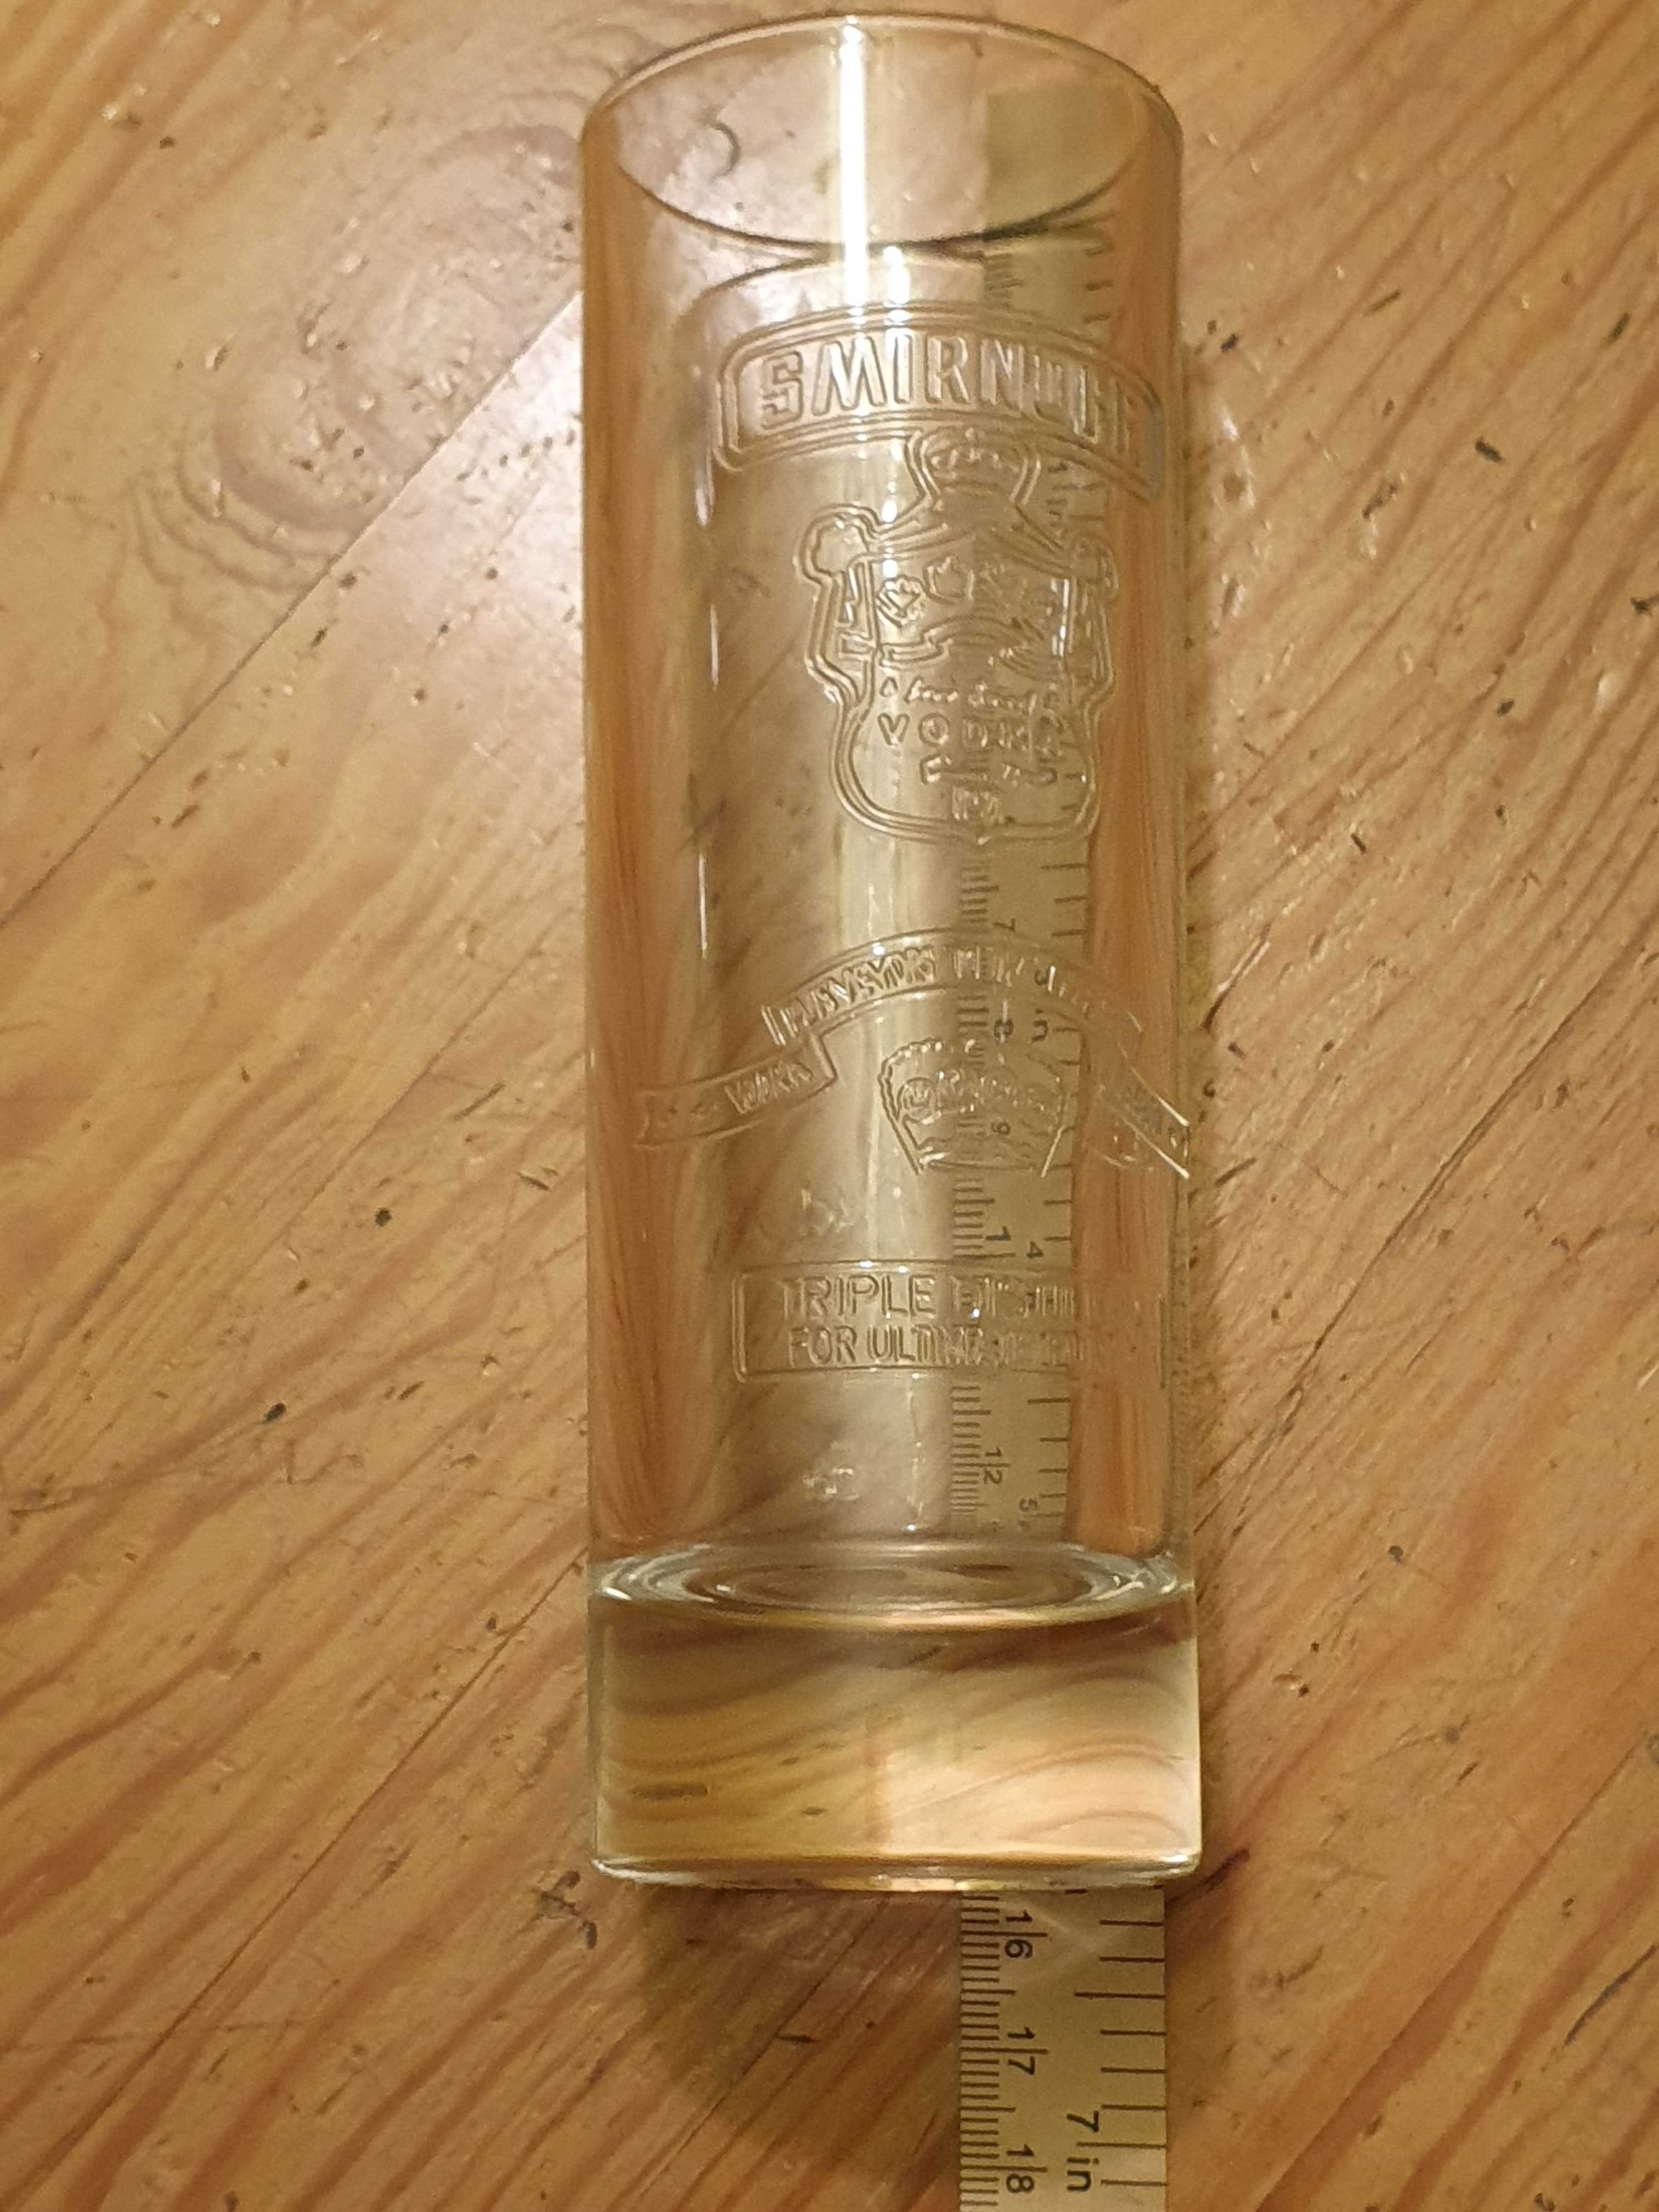 Wąska szklaneczka kolekcjonerska Smirnoff